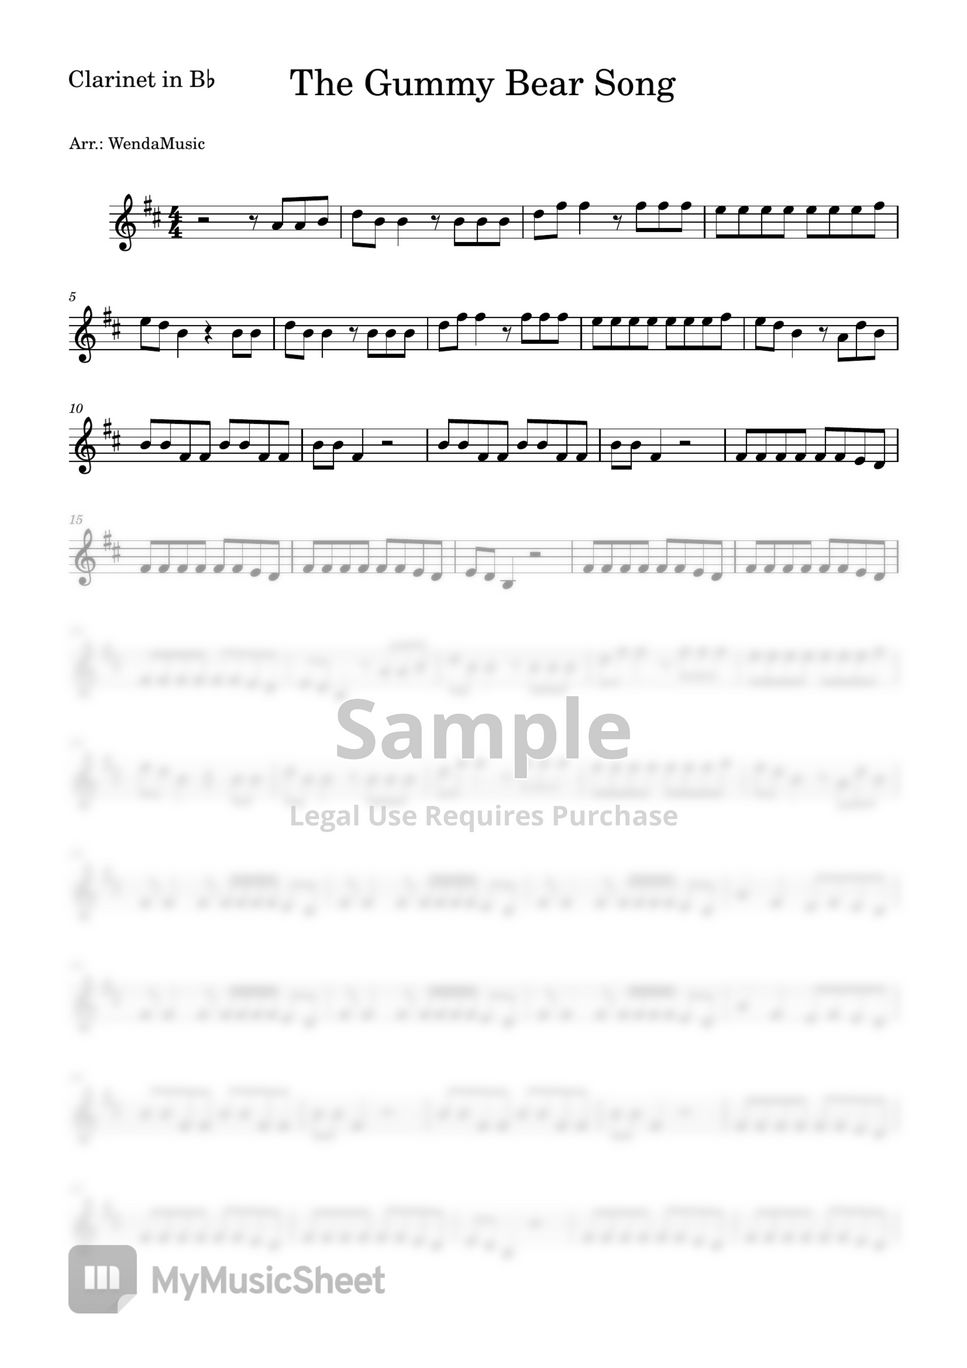 Gummy Bear - The Gummy Bear Song (Clarinet in B♭) by WendaMusic